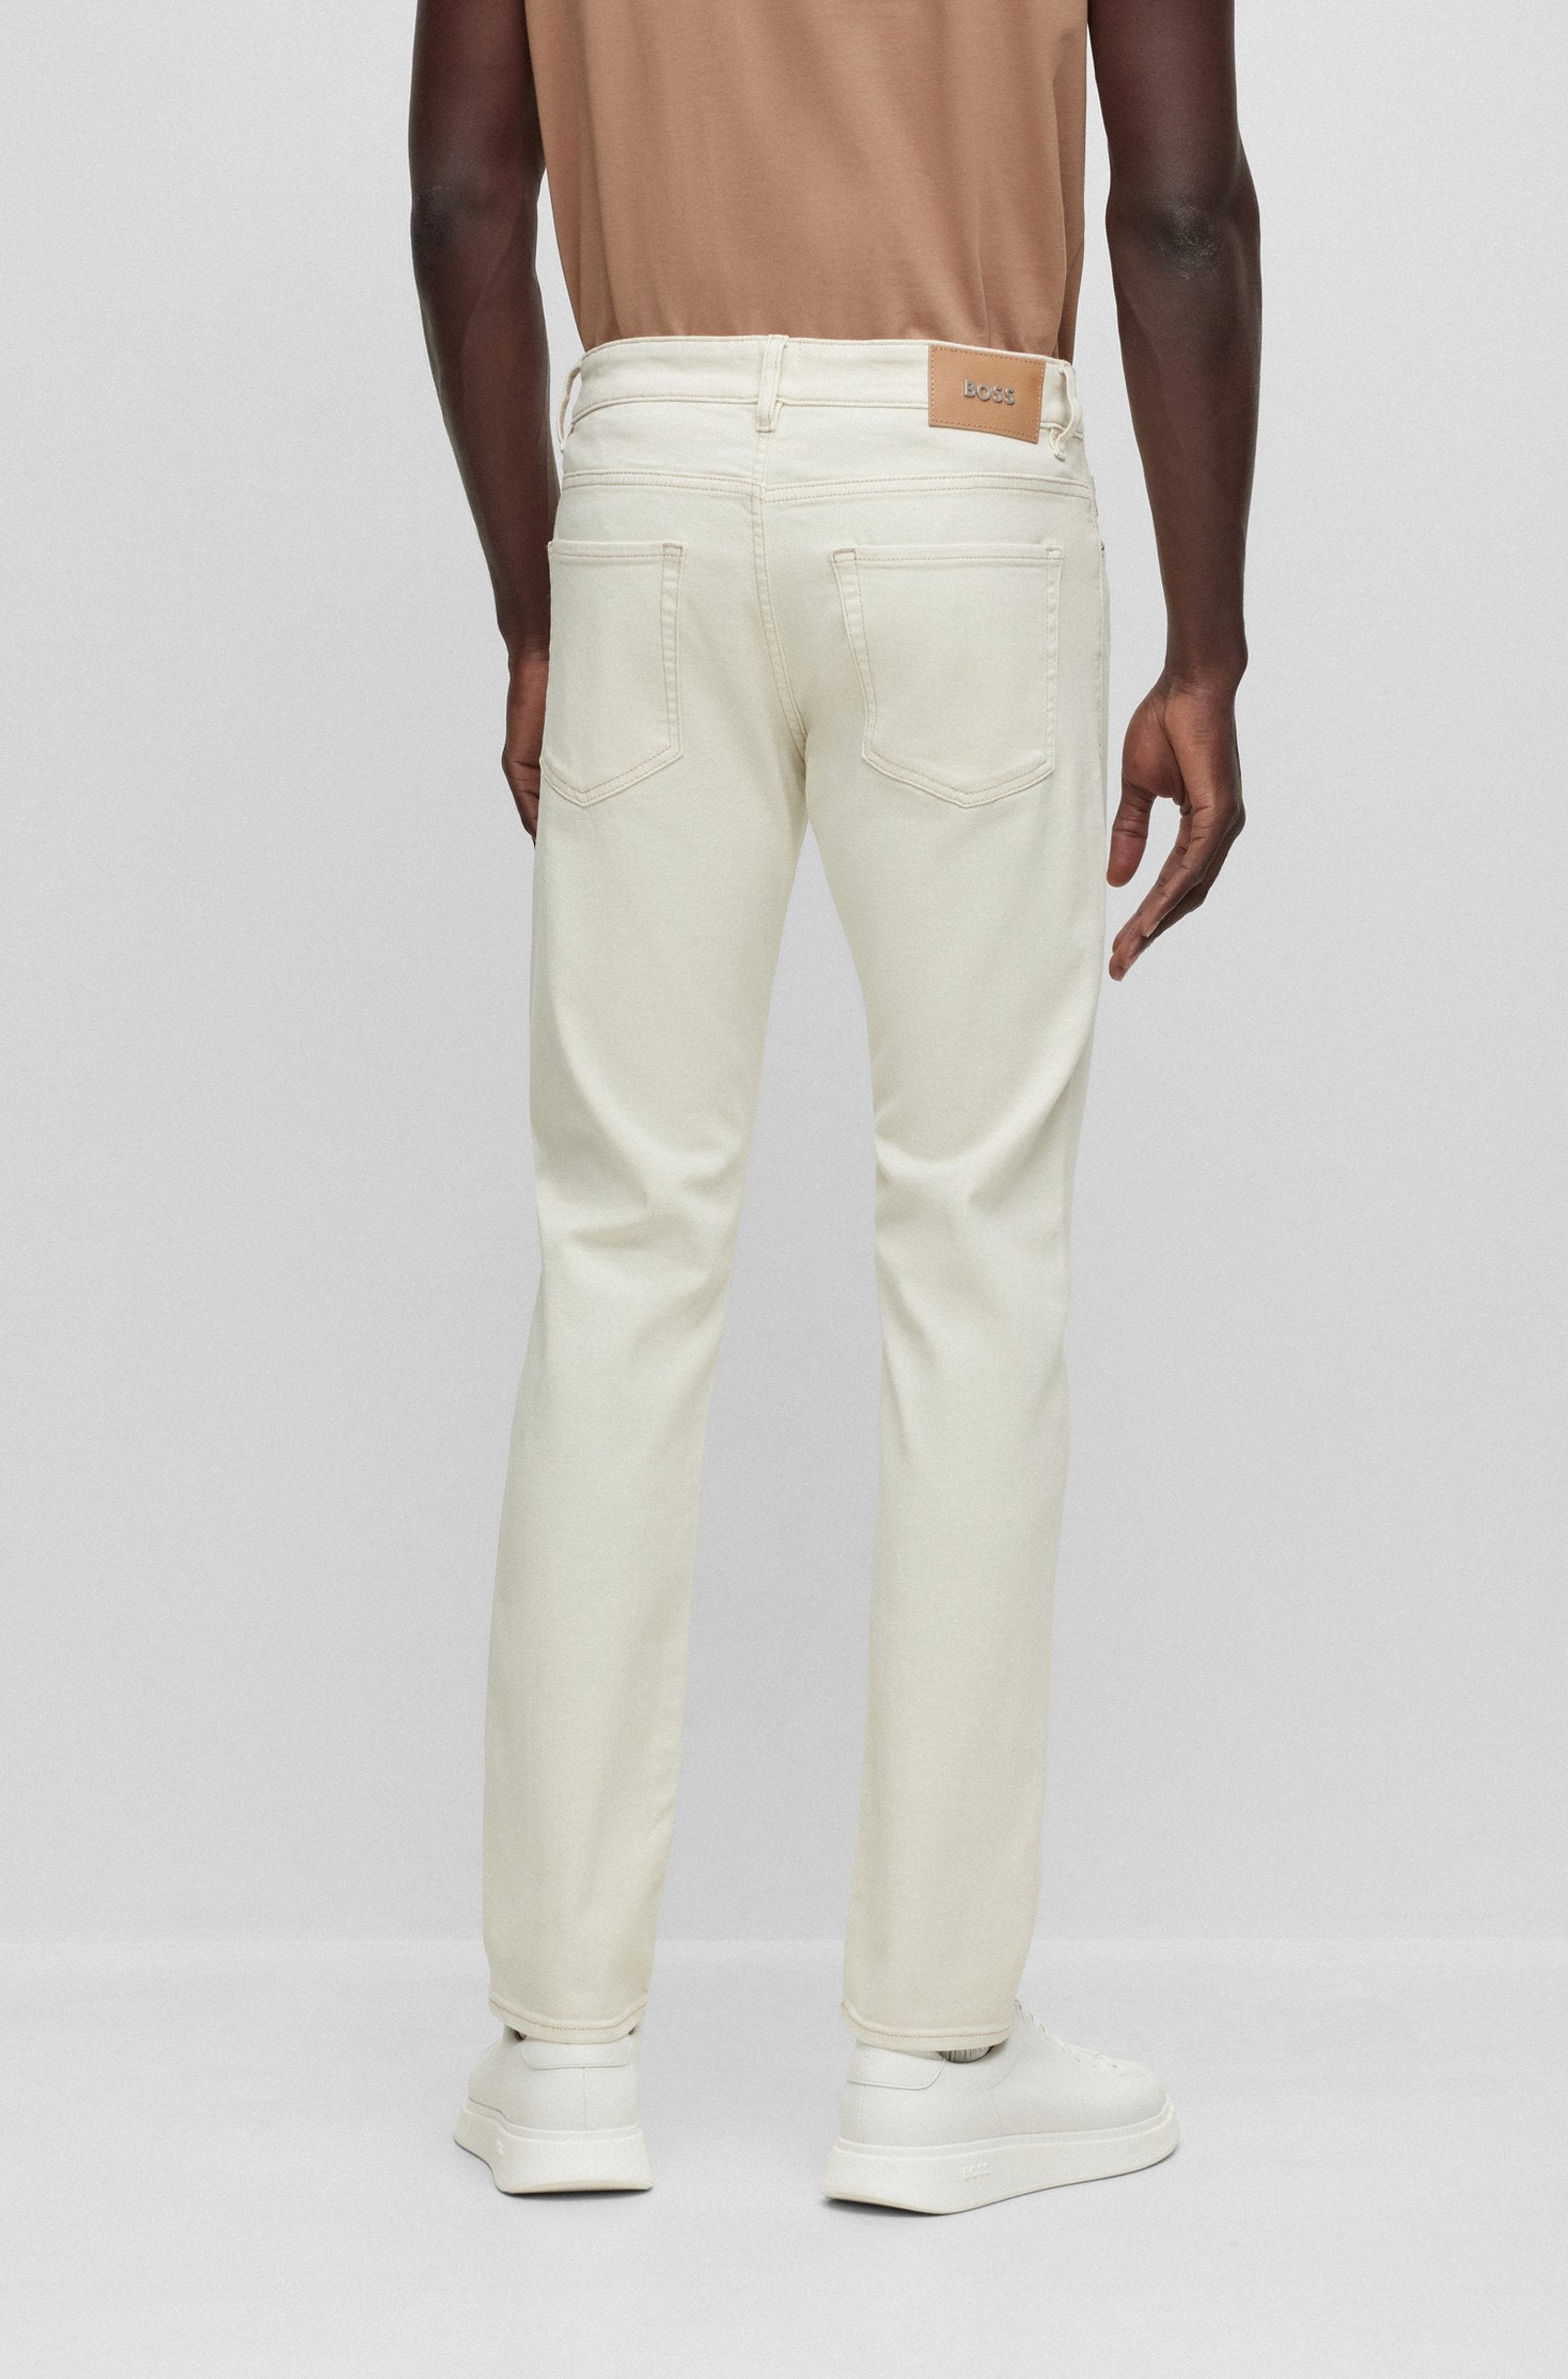 BOSS - DELAWARE3-1 Slim Fit Jeans In Super Soft Open White Italian Denim 50501074 131